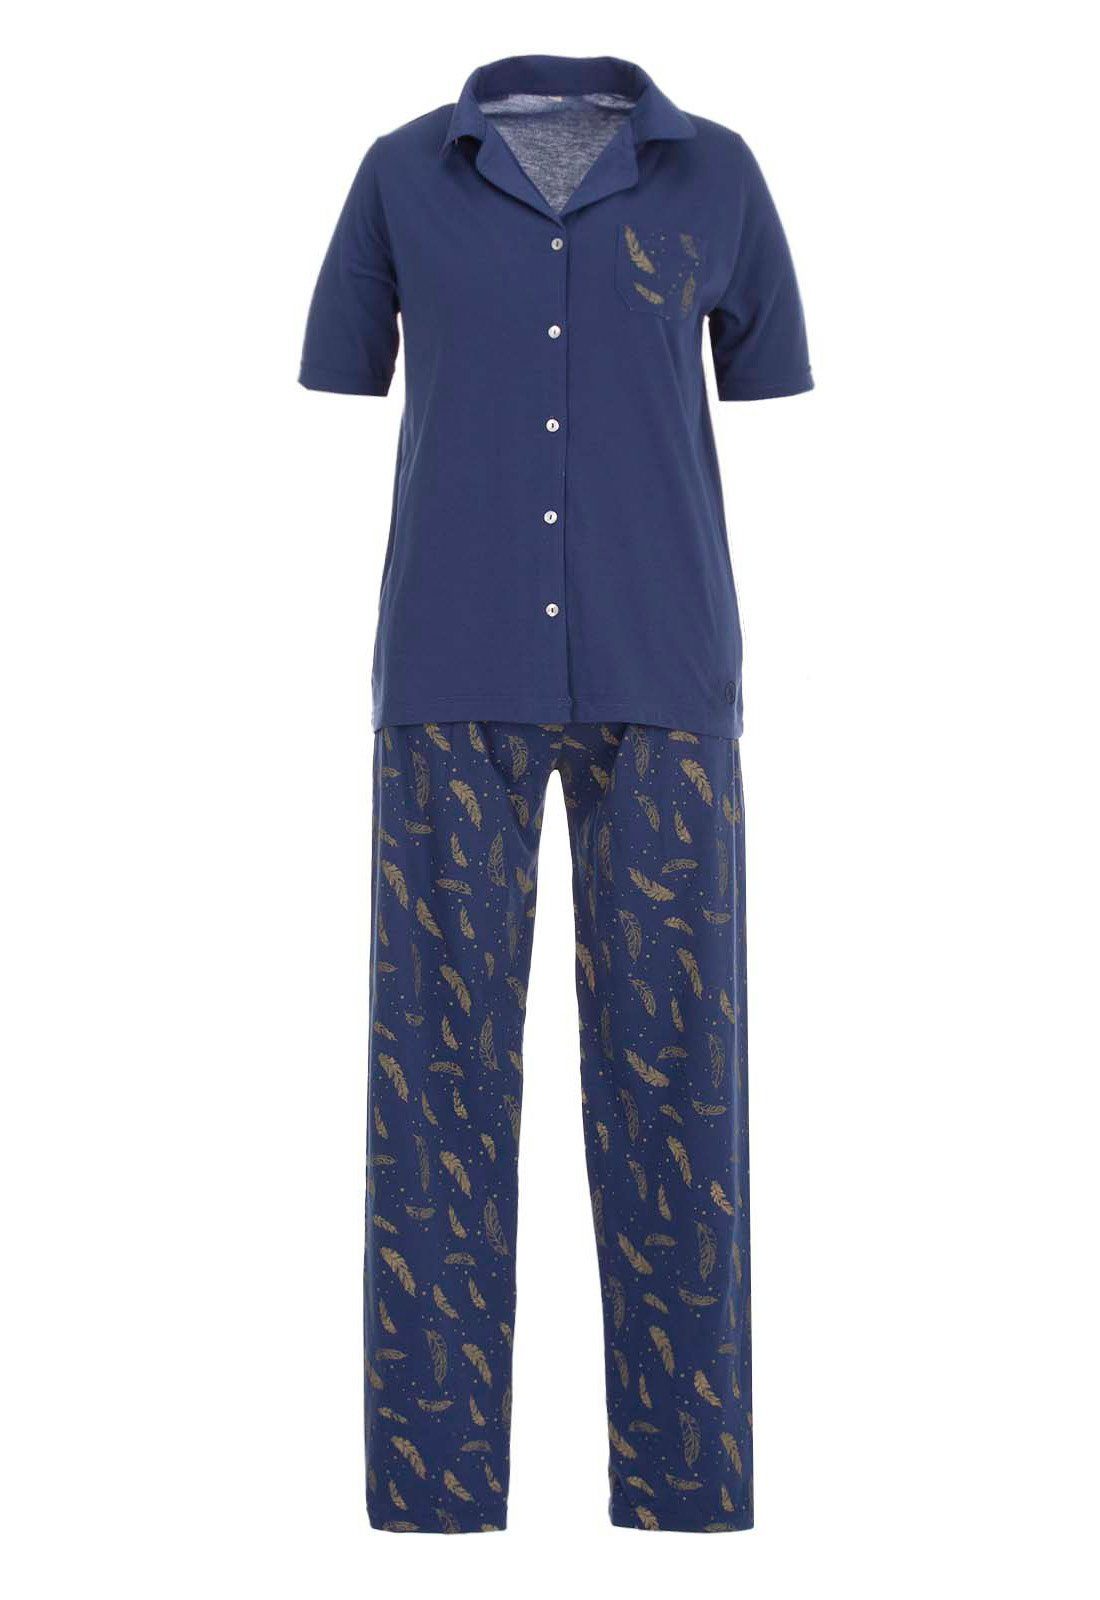 Rodung zeitlos Schlafanzug Pyjama Set Kurzarm blau - Feder